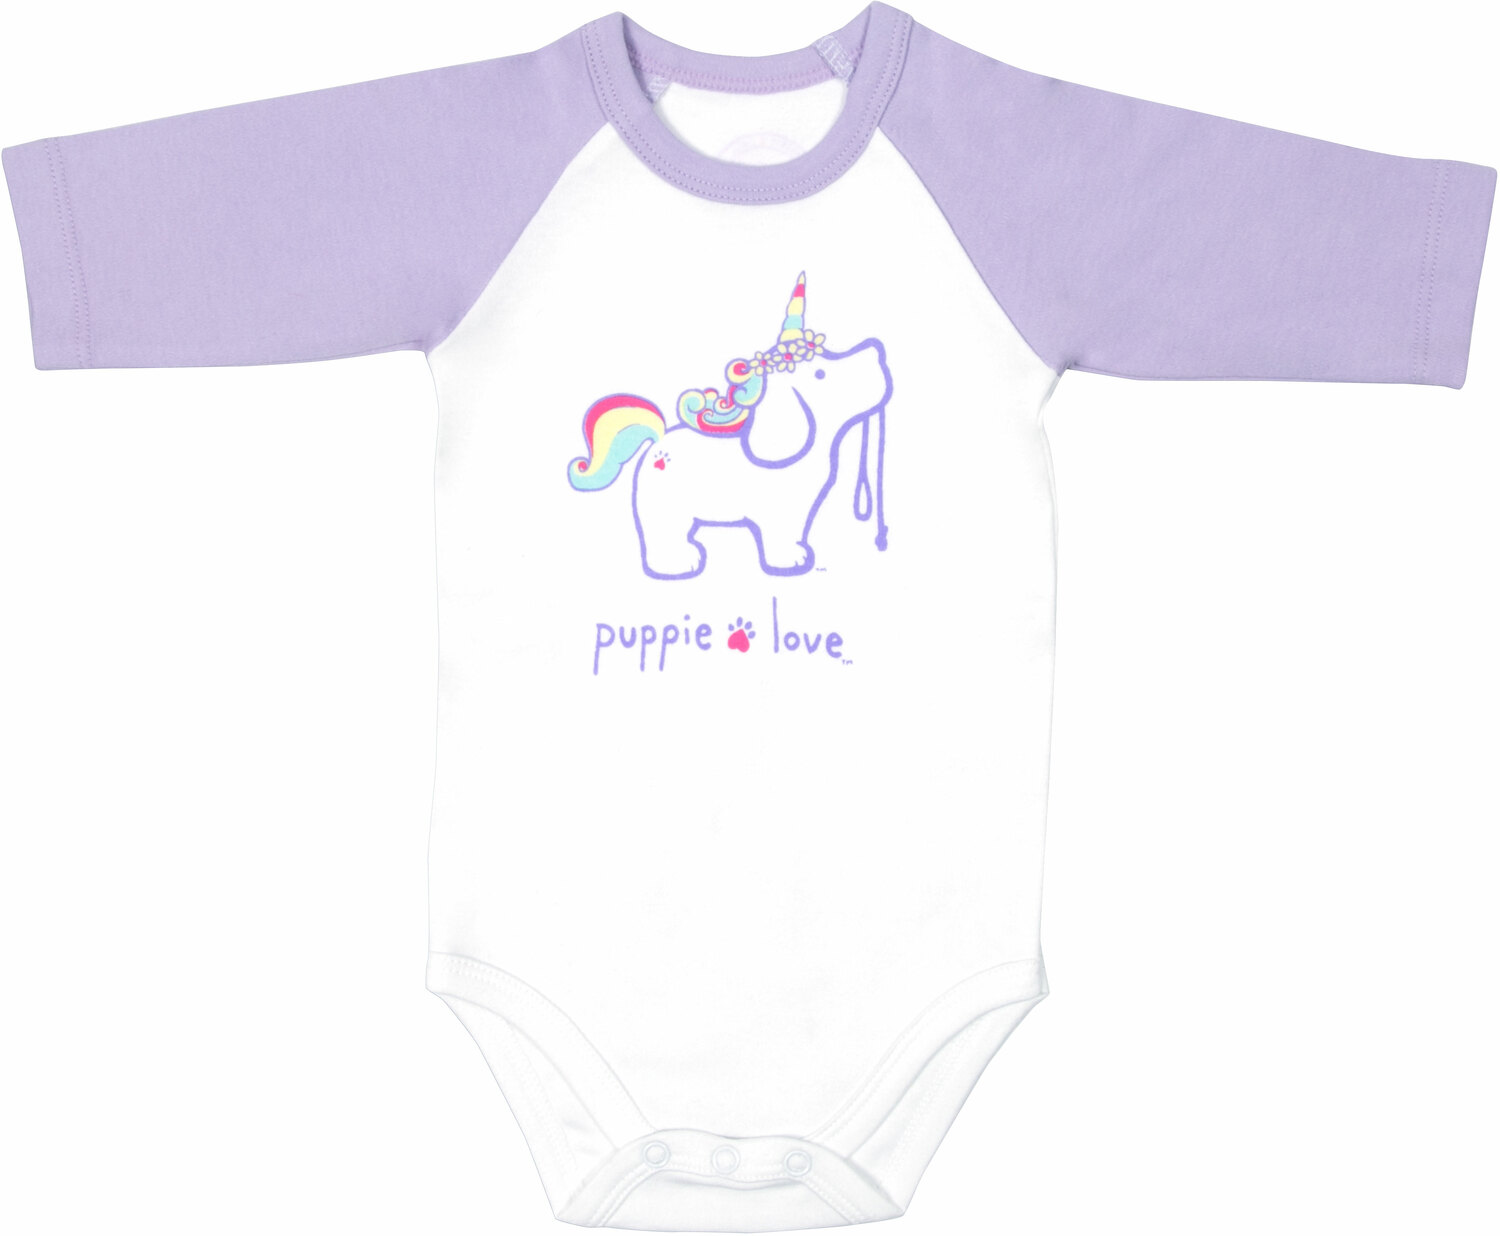 Unicorn by Puppie Love - Unicorn - 6-12 Months
3/4 Length Purple Sleeve Onesie